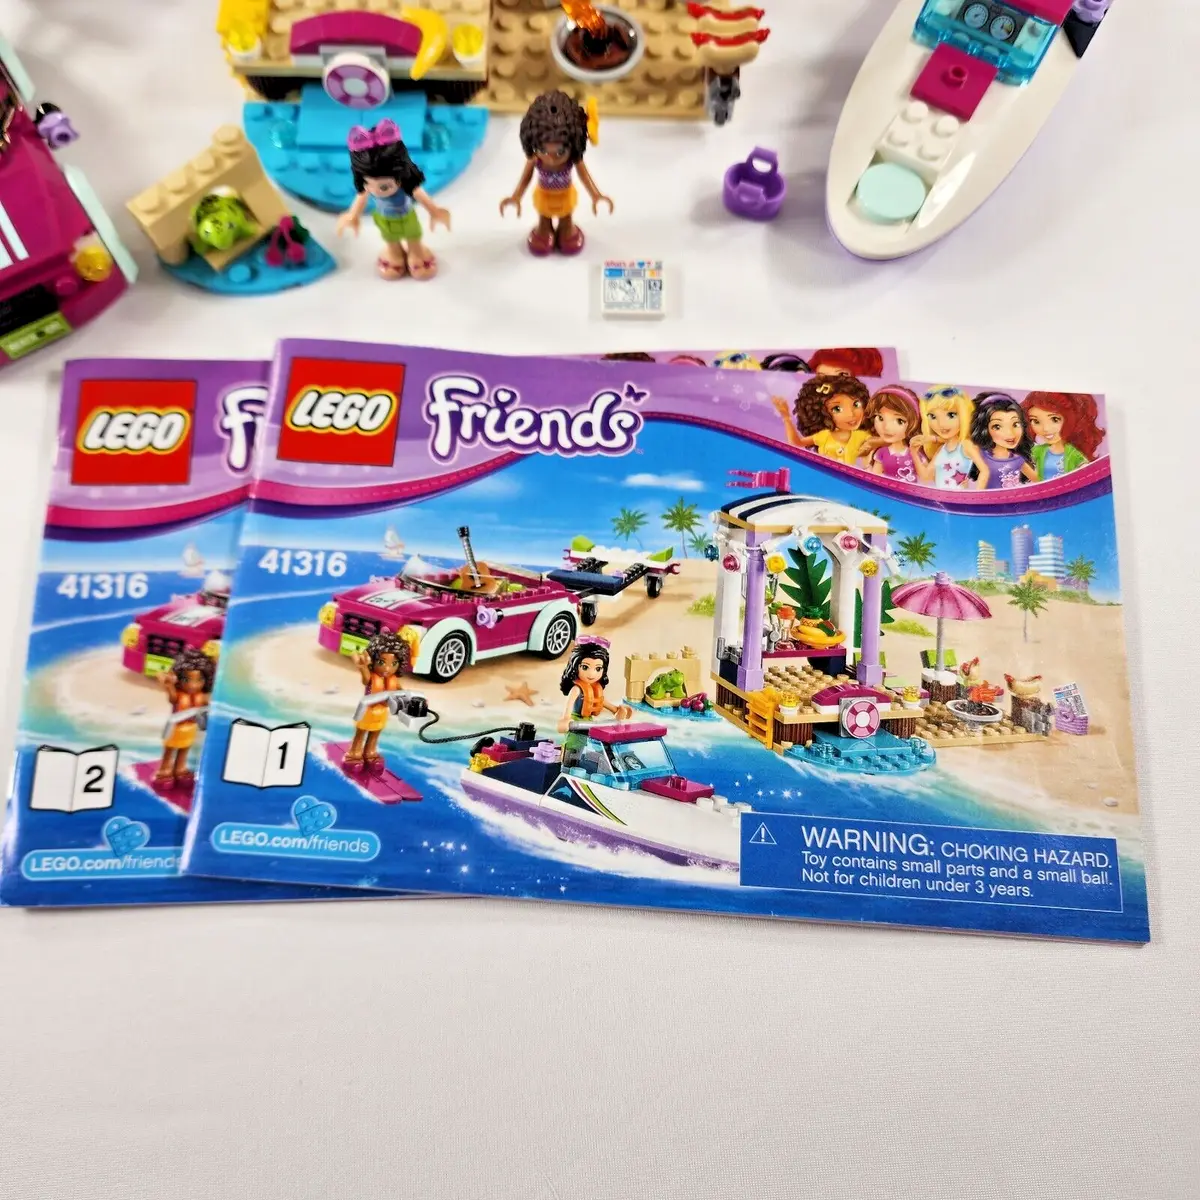 Bermad Desperat fjende Lego Friends 41316: Andrea&#039;s Speedboat Transporter | eBay